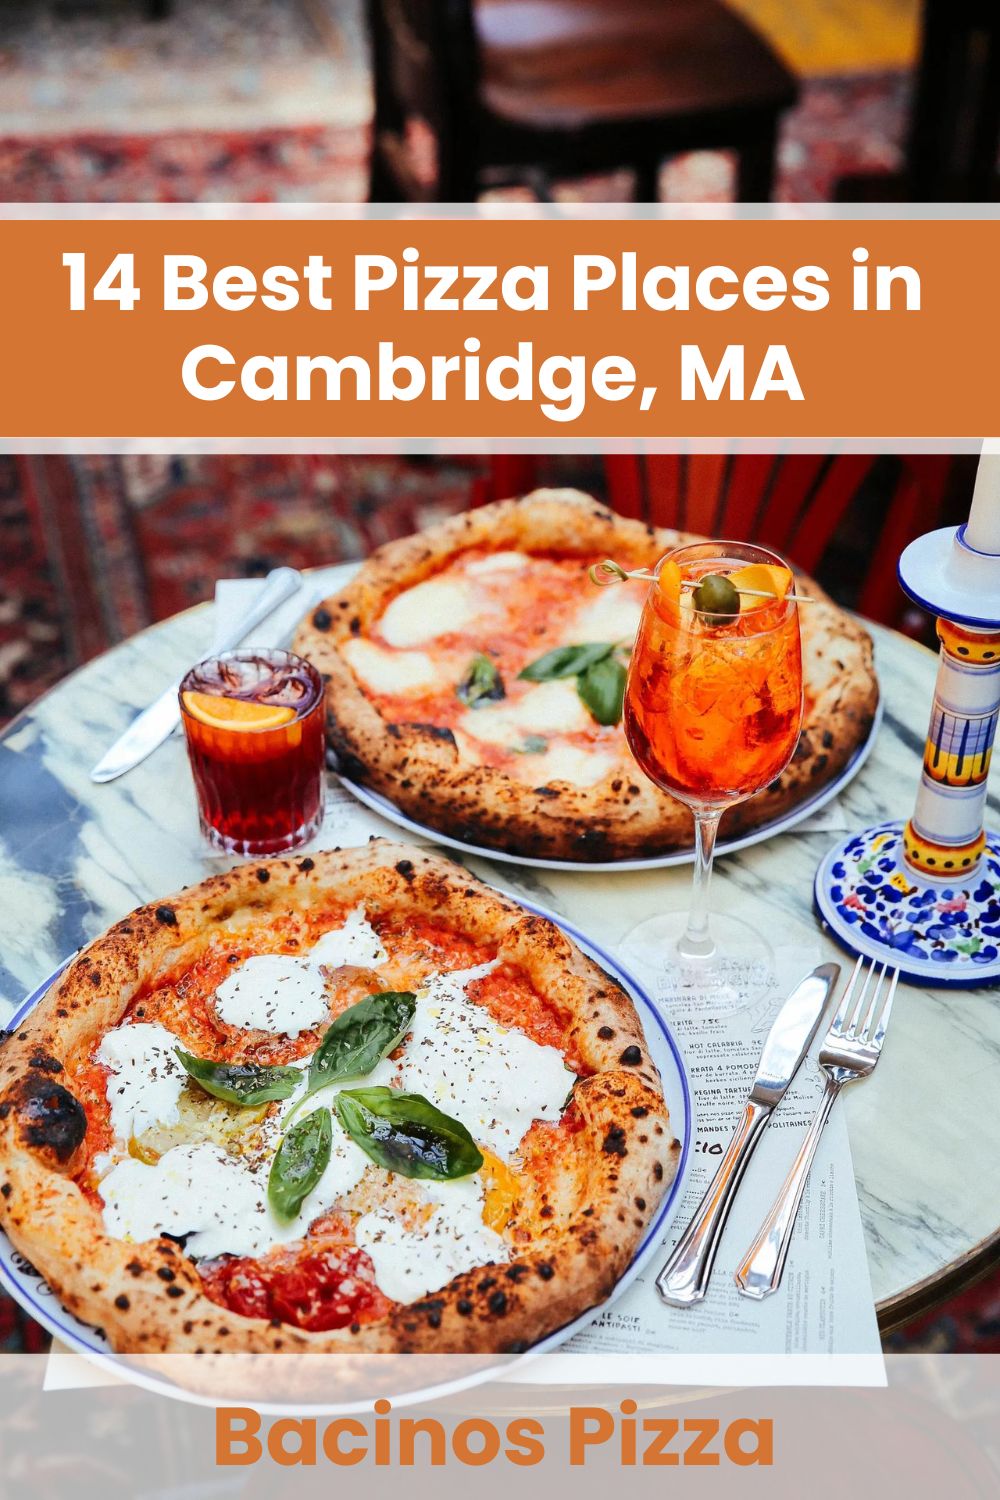 Pizza Places in Cambridge